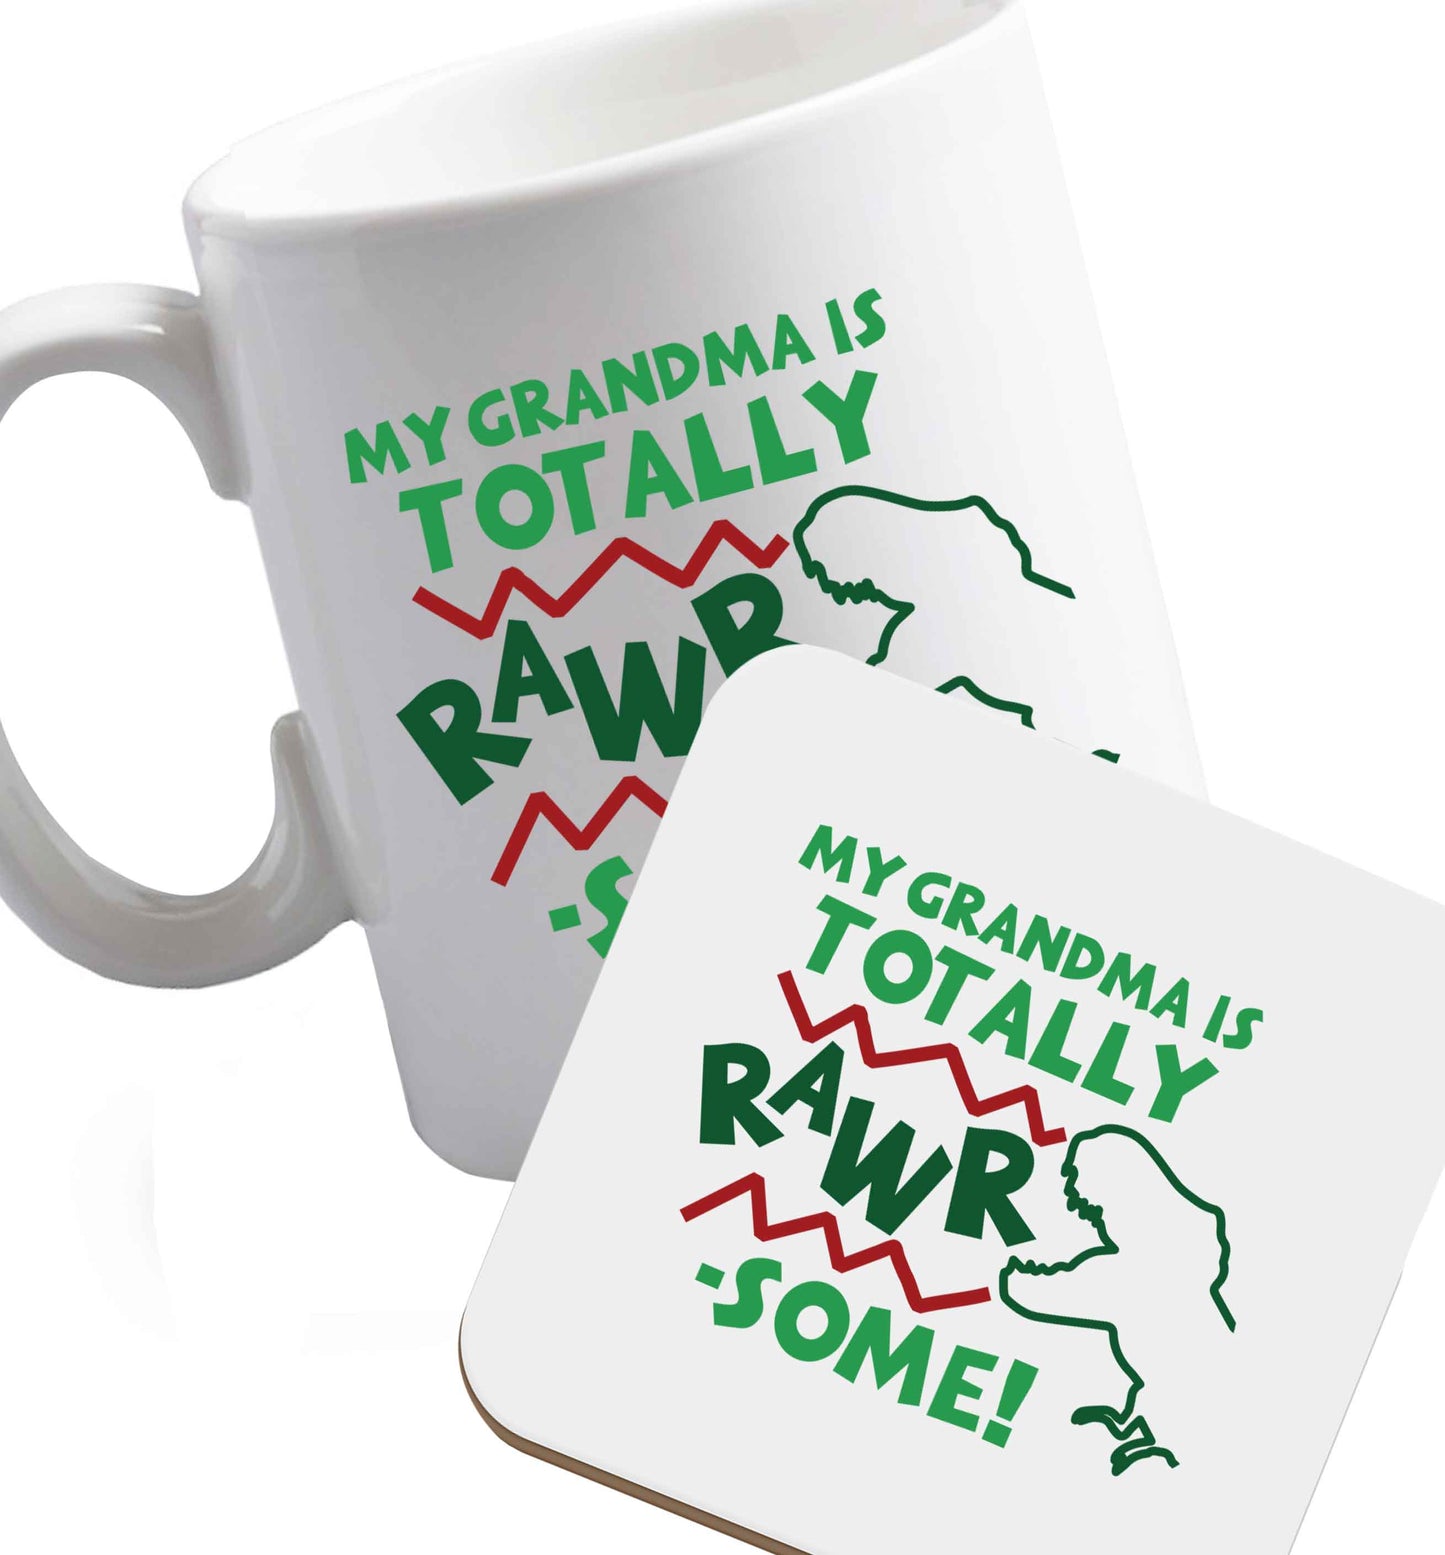 10 oz My grandma is totally rawrsome ceramic mug and coaster set right handed